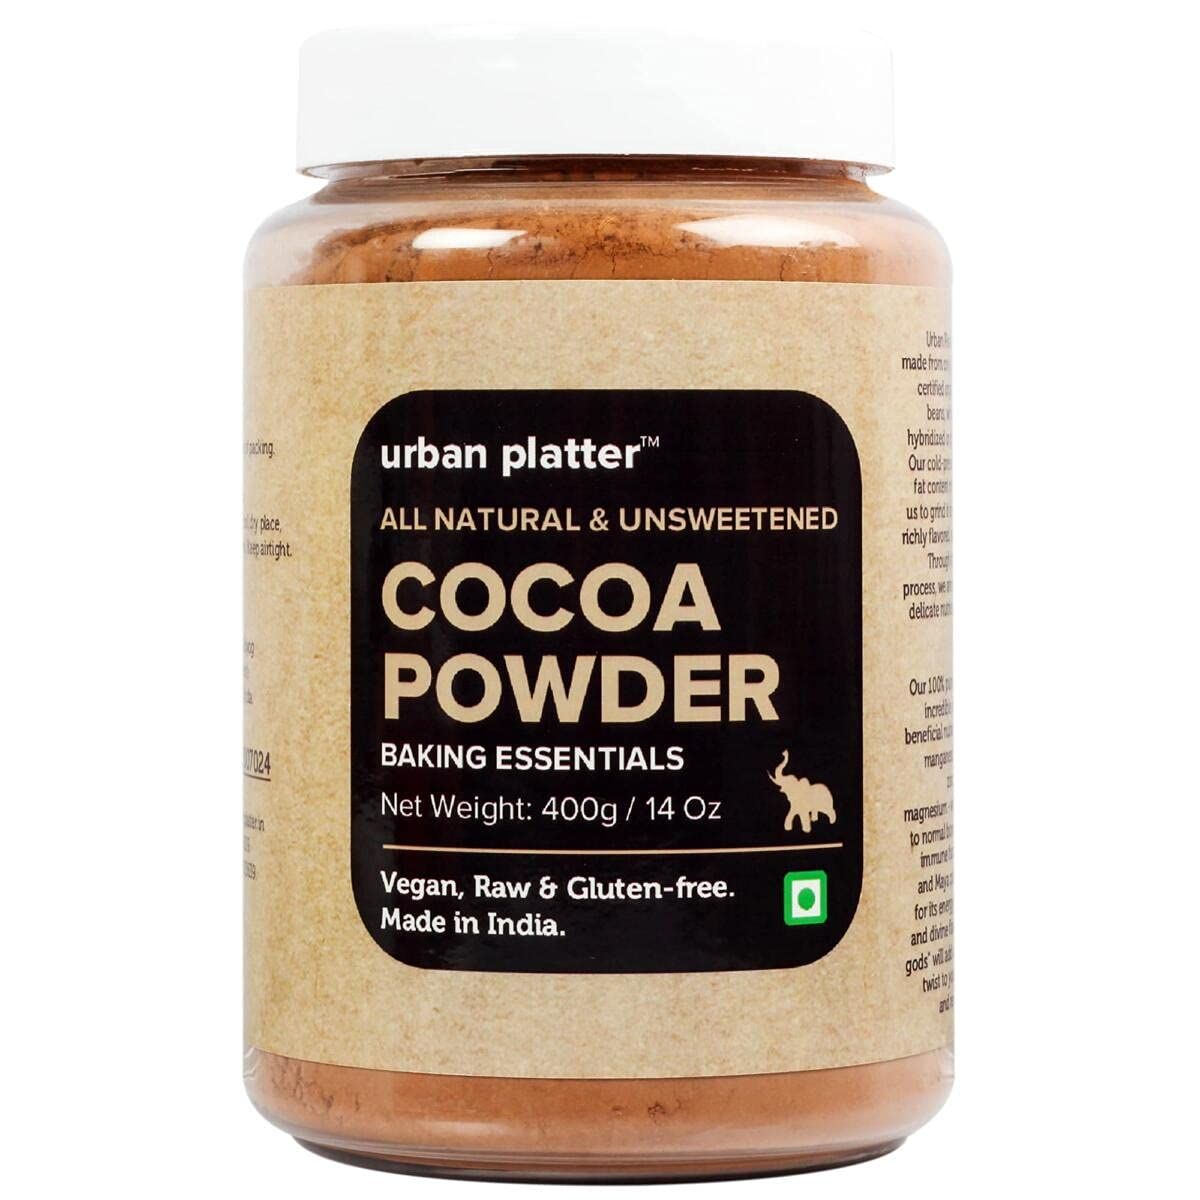 Urban Platter Cocoa Powder Image